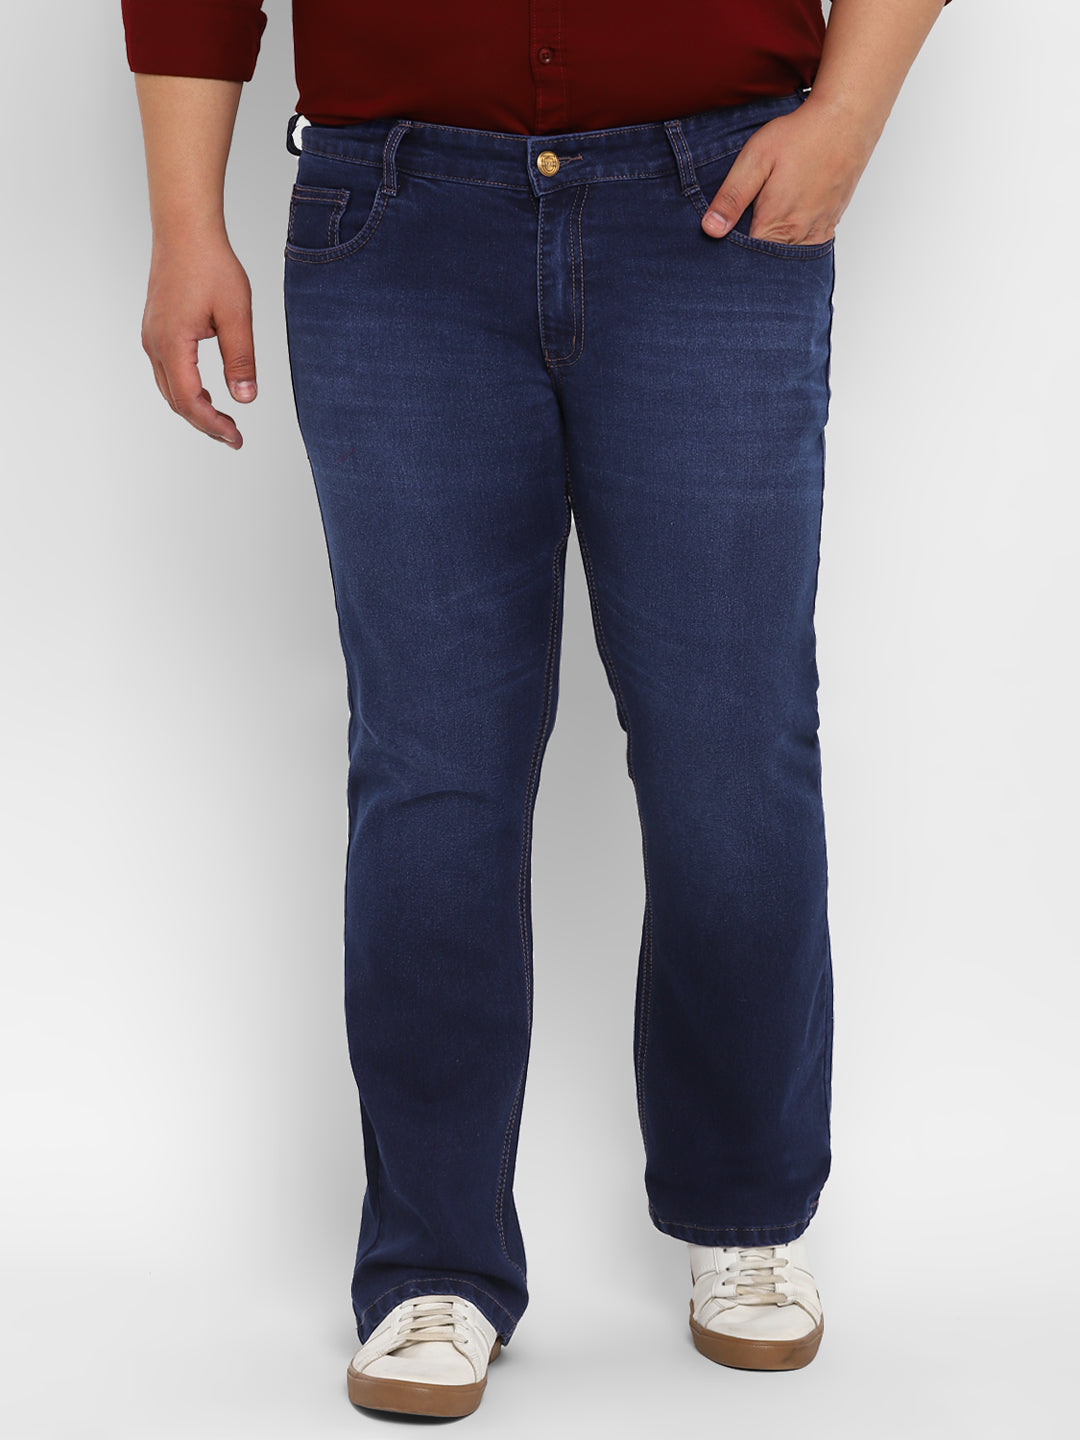 Urbano Plus Men's Dark Blue Regular Fit Washed Denim Bootcut Jeans Stretchable